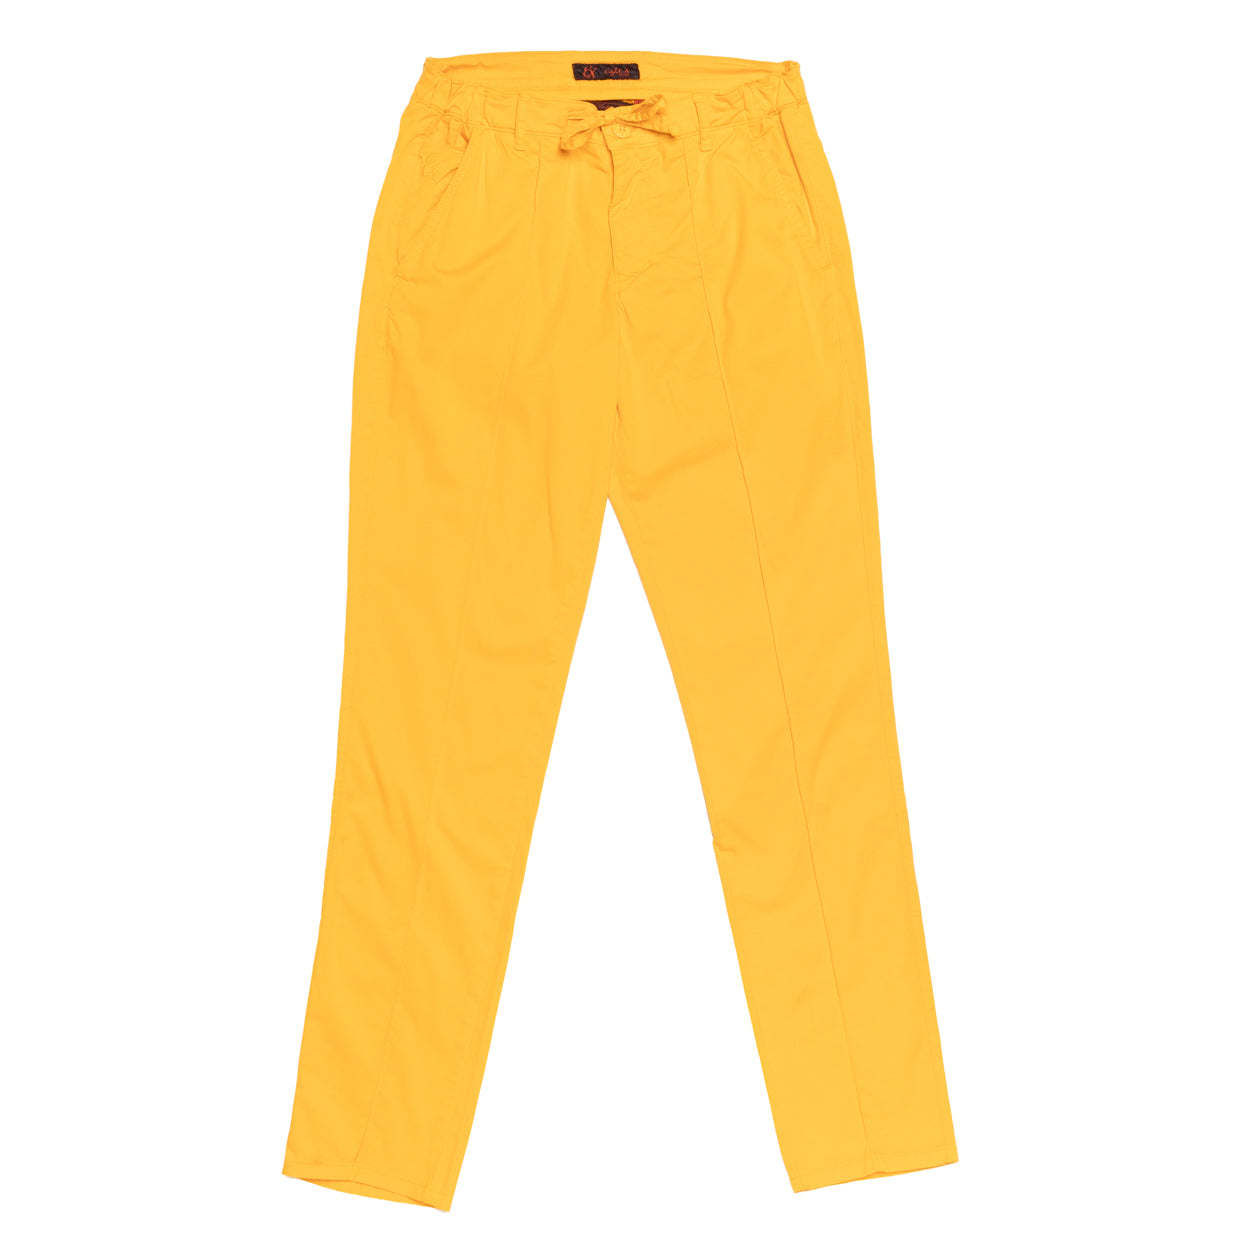 Chino Pants w/ Drawstring Waist - Golden Mustard Yellow